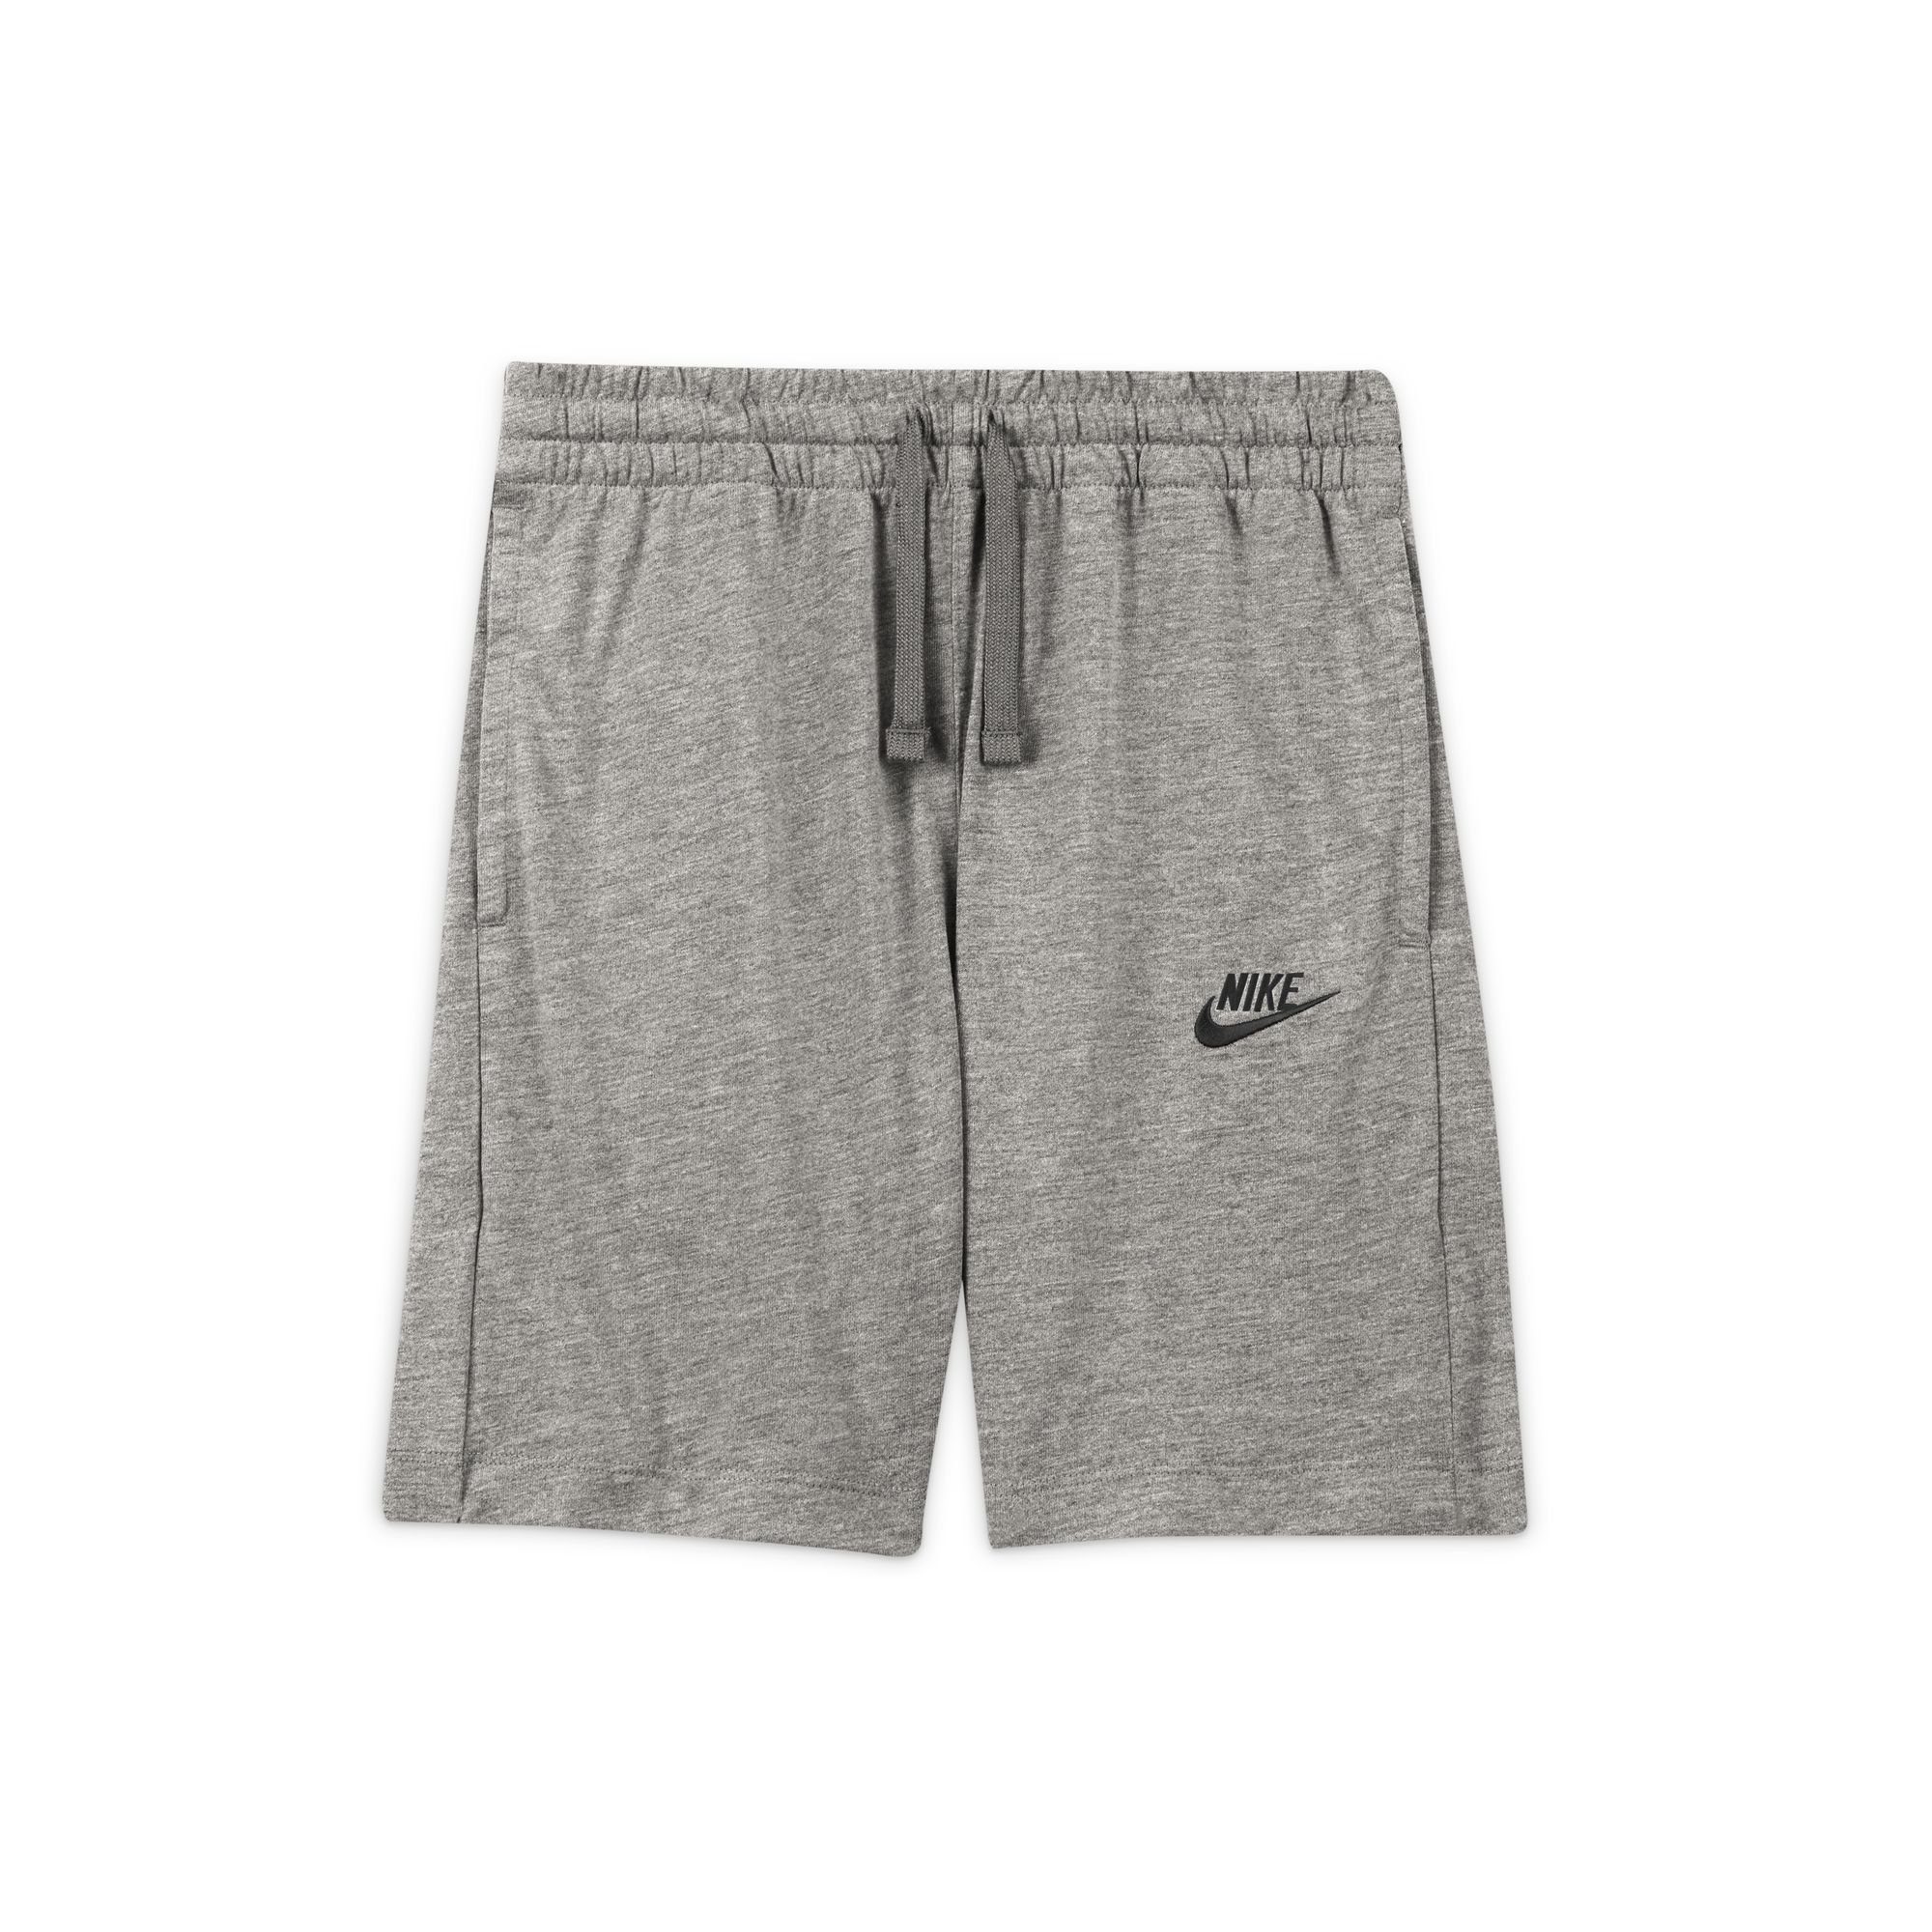 grau KIDS' SHORTS Sportswear JERSEY (BOYS) Nike BIG Shorts